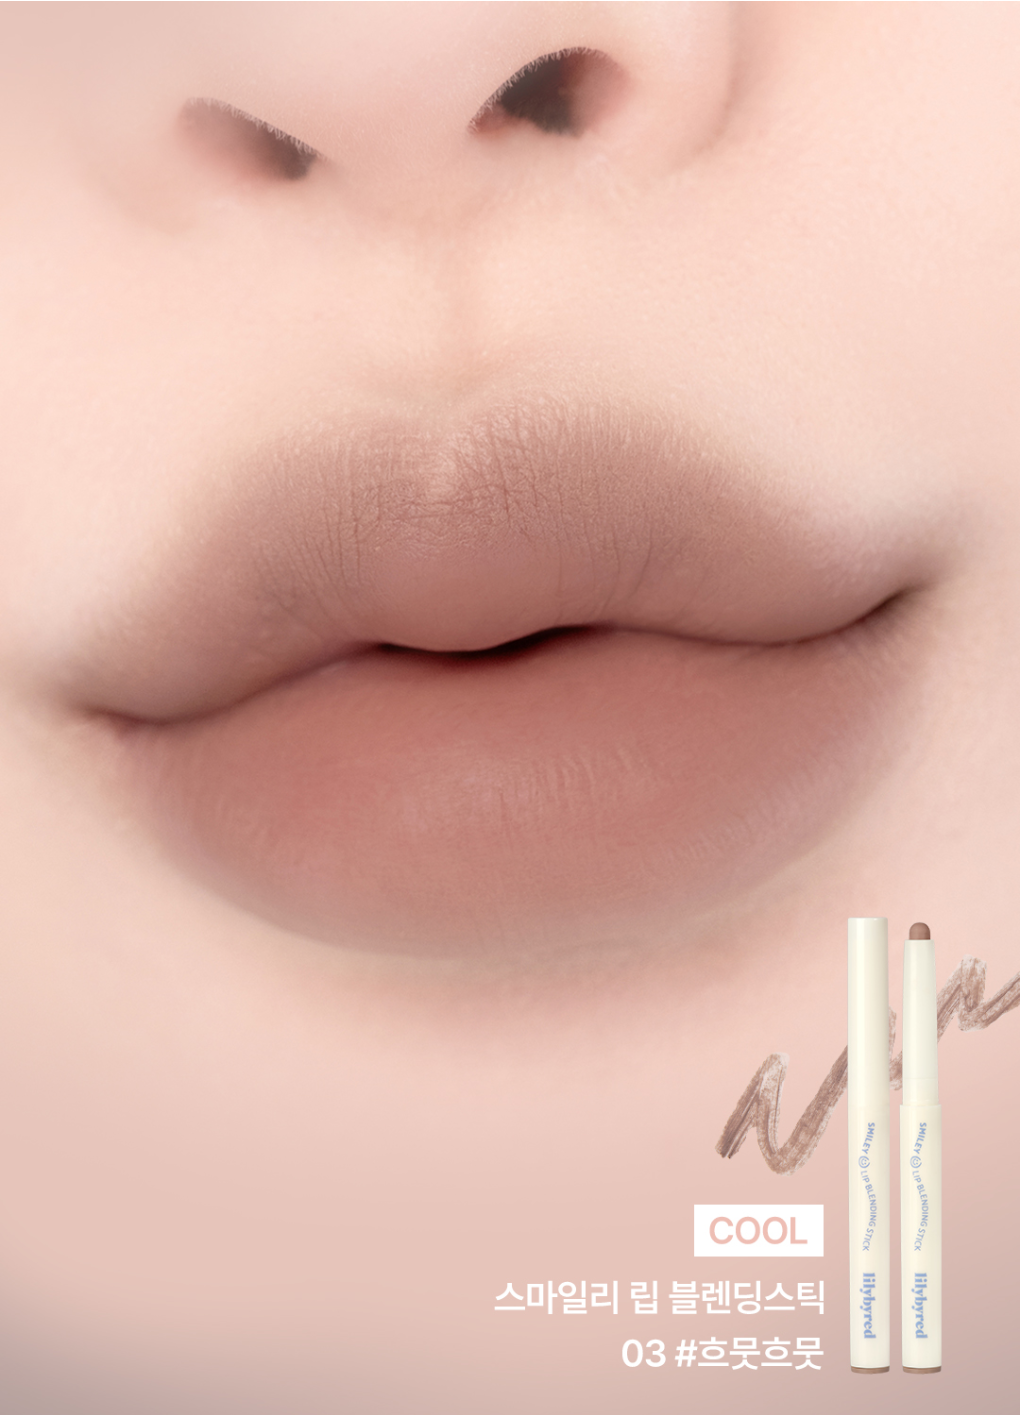 lilybyred - Smiley Lip Blending Stick - 5 Colors